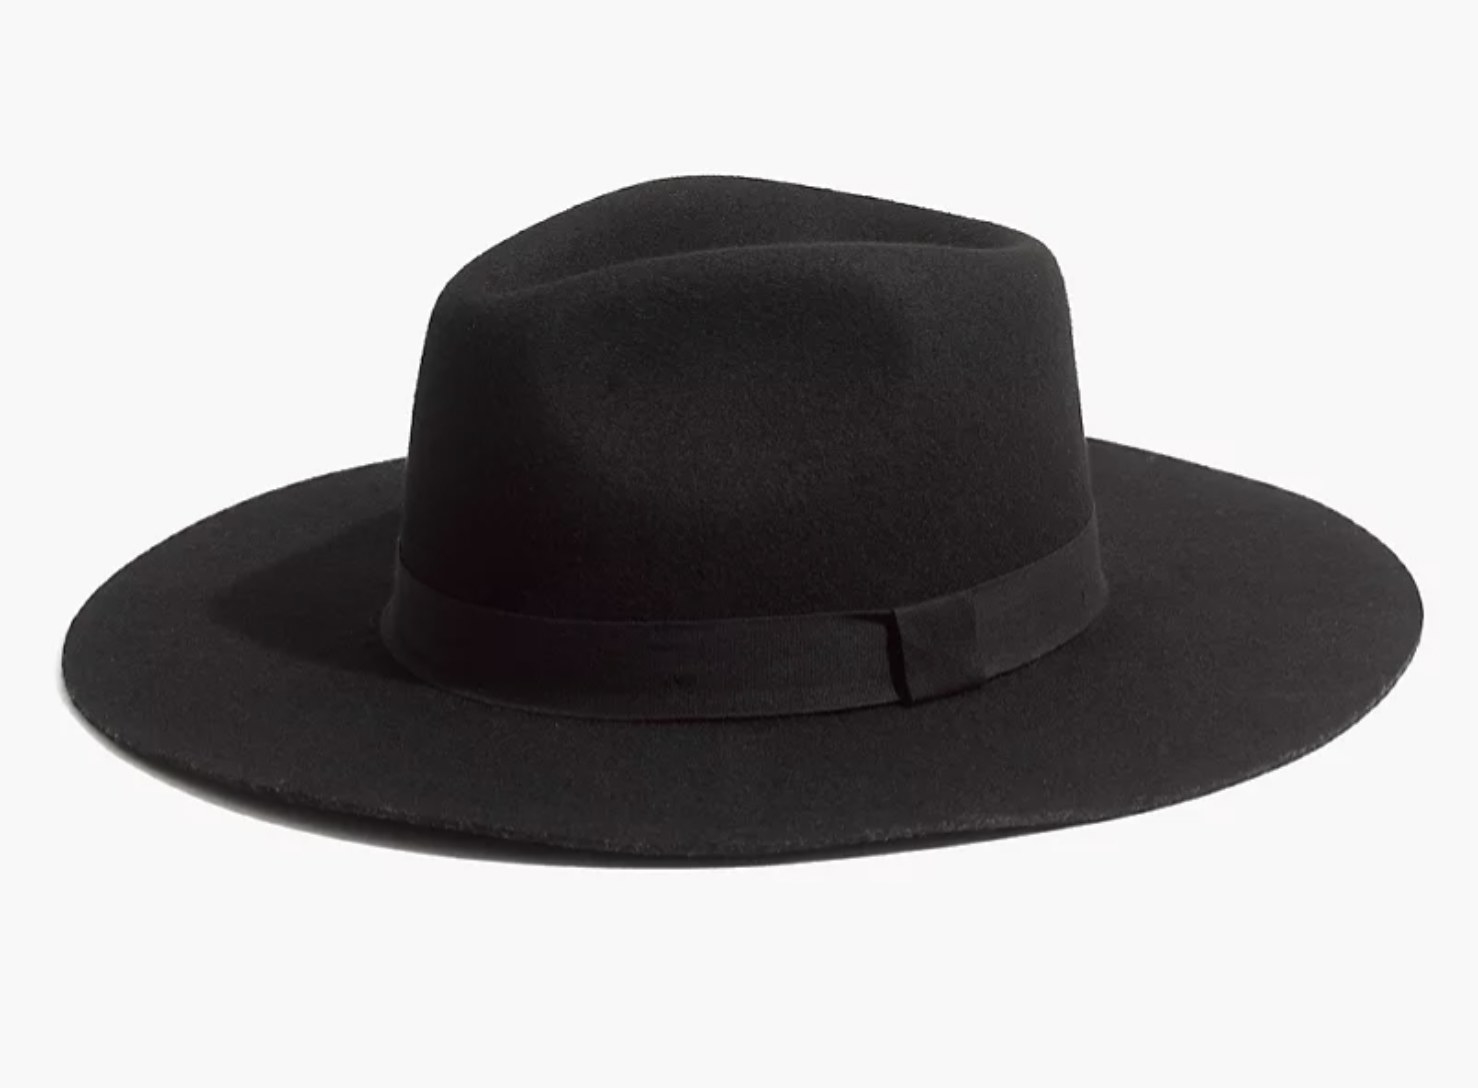 a black wide brim felt hat